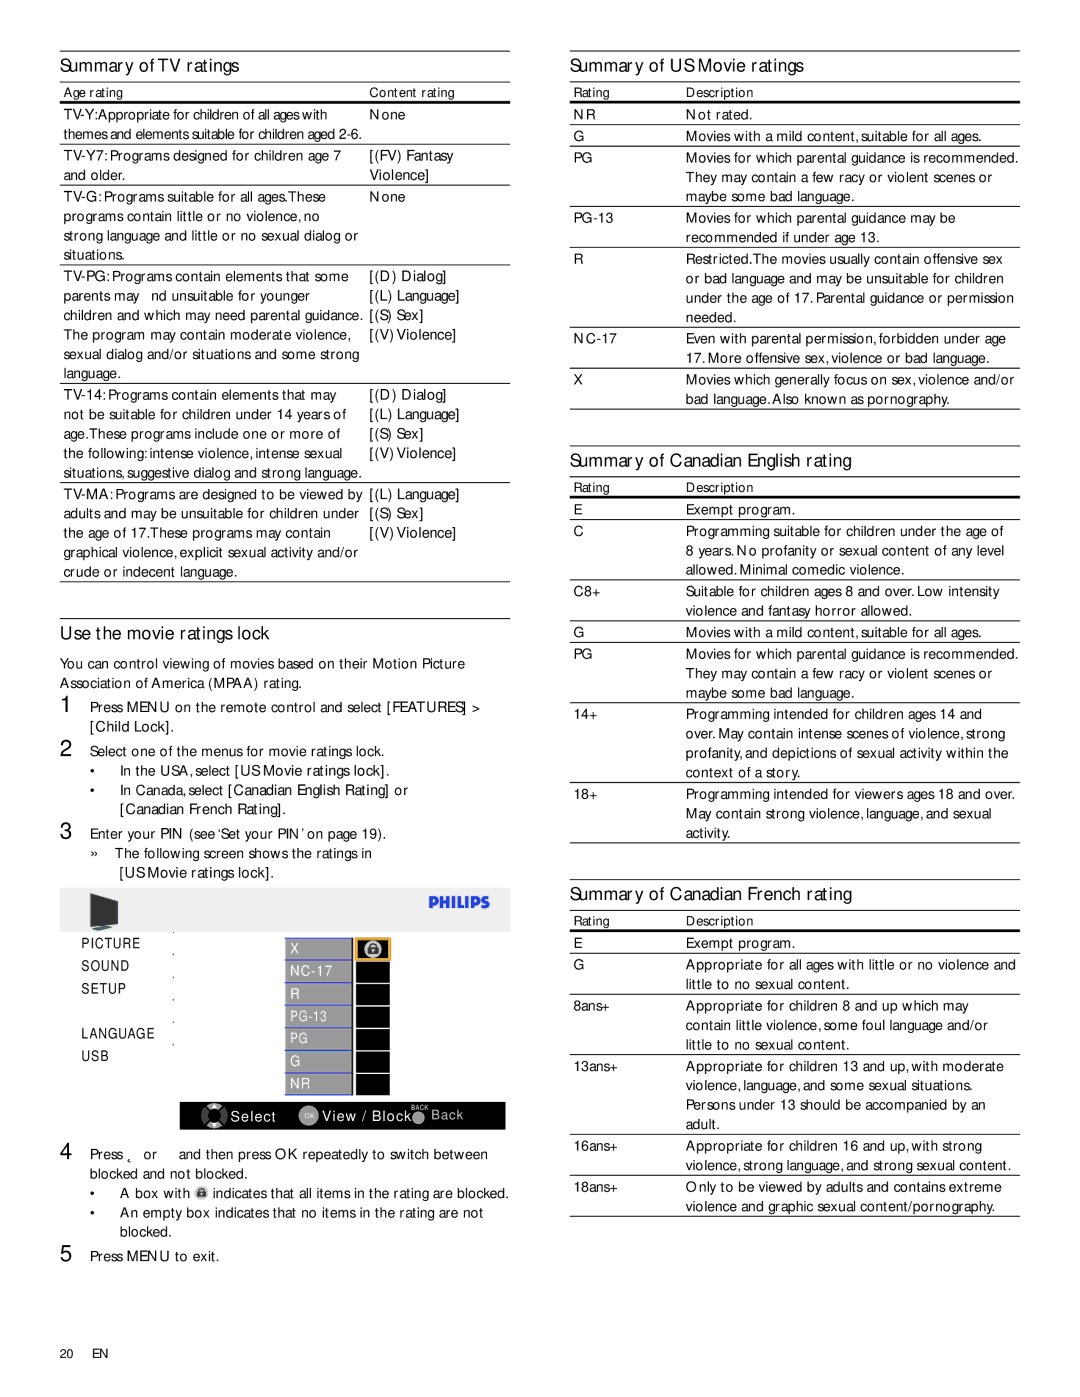 Philips 32PFL3514D user manual Summary of TV ratings, Use the movie ratings lock, Summary of US Movie ratings 